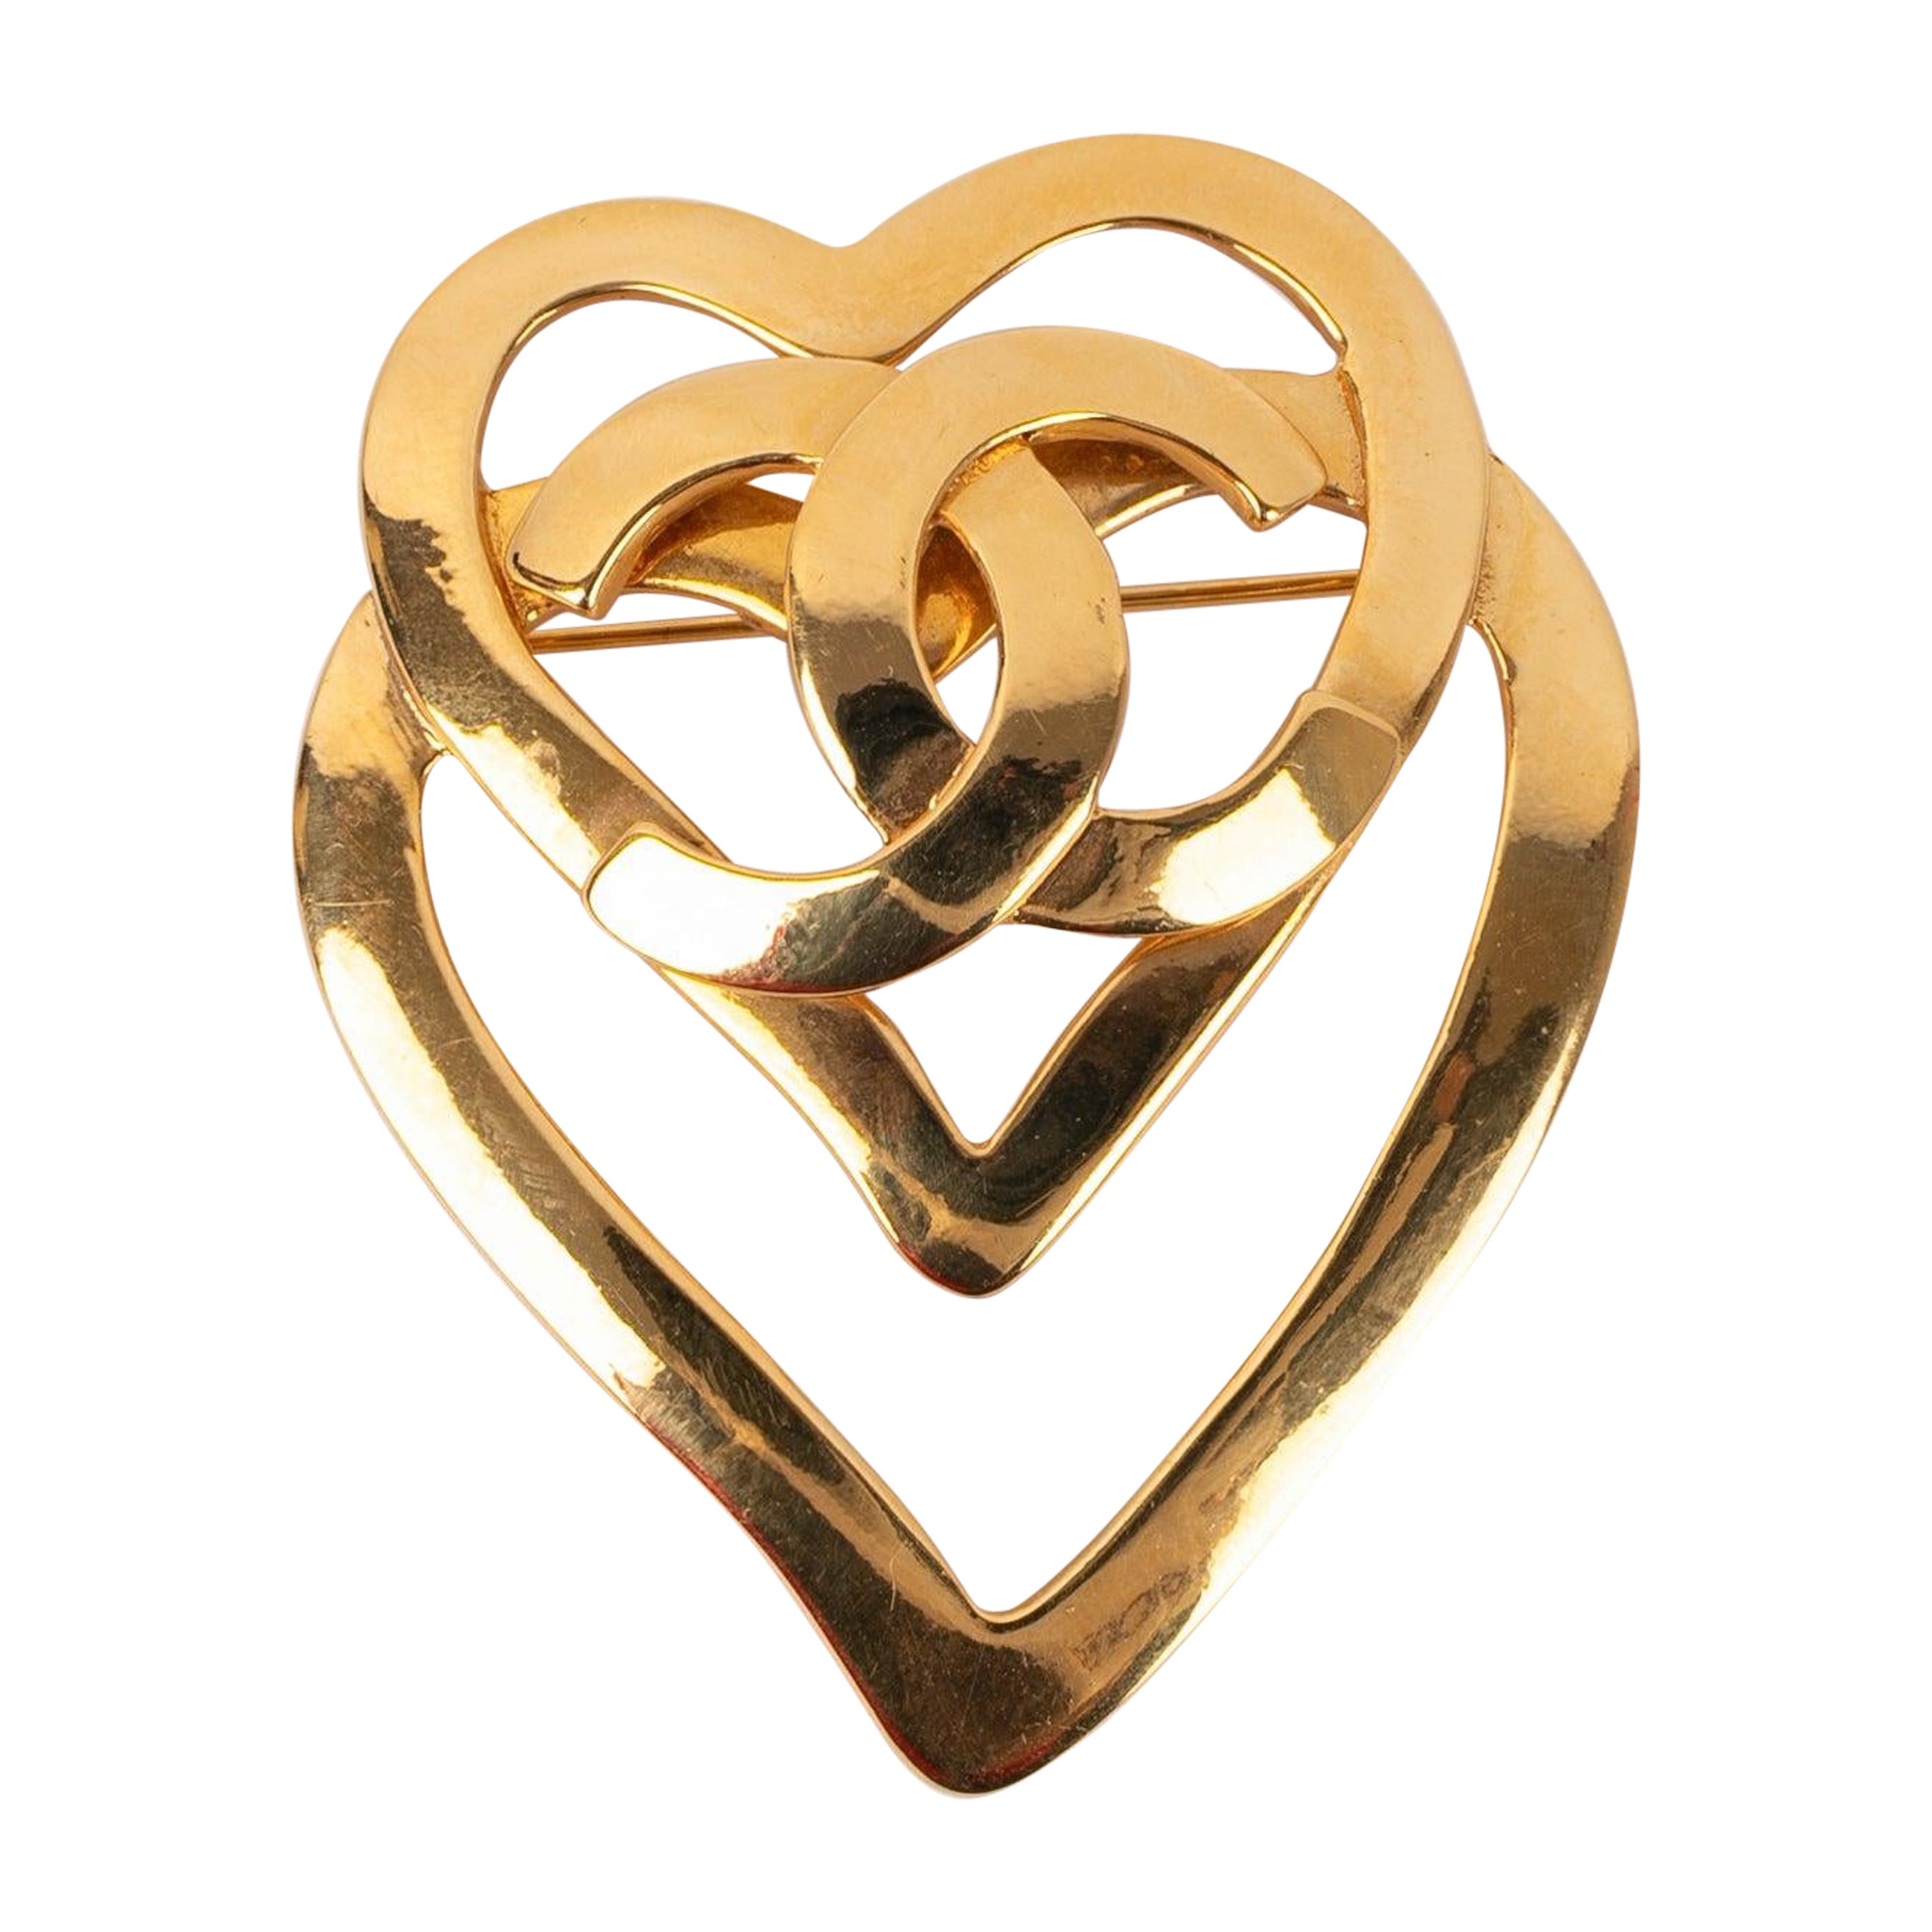 Chanel Heart Brooch in Golden Metal, 1995